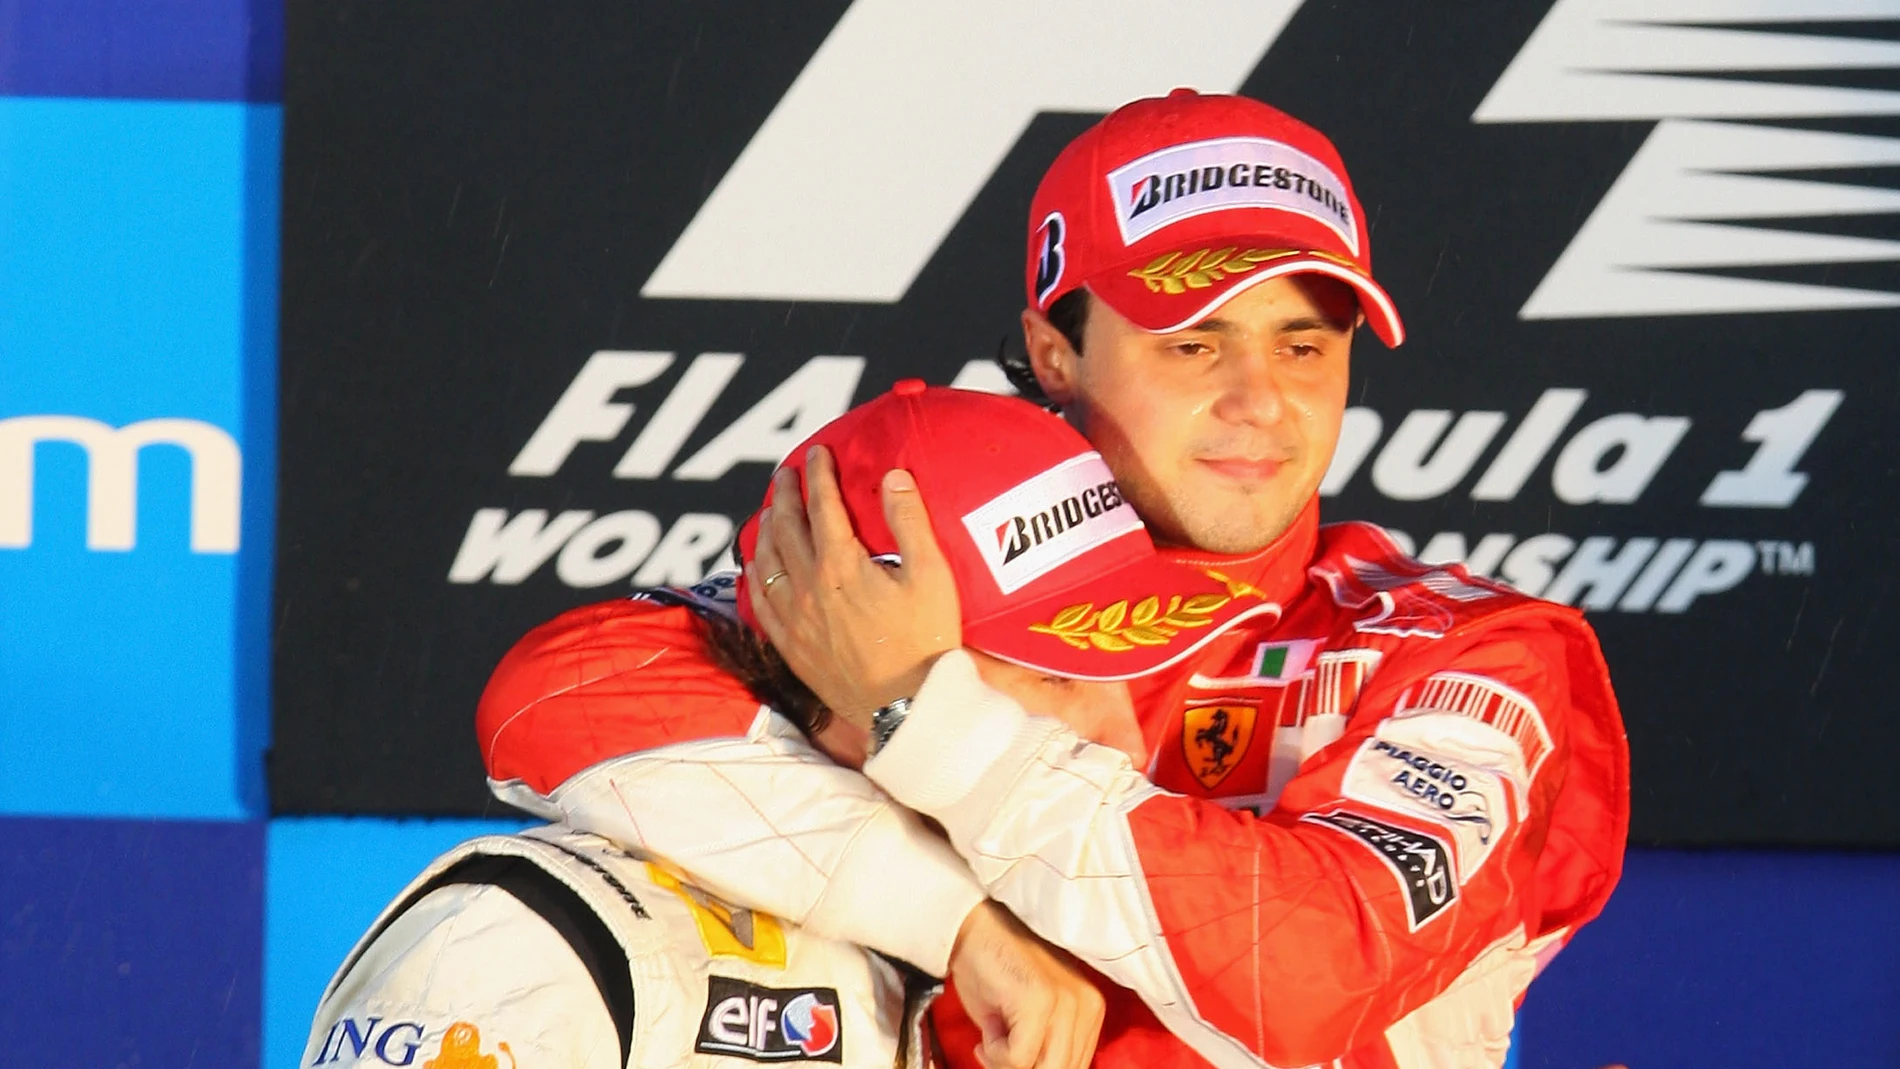 Felipe Massa abraza a Fernando Alonso